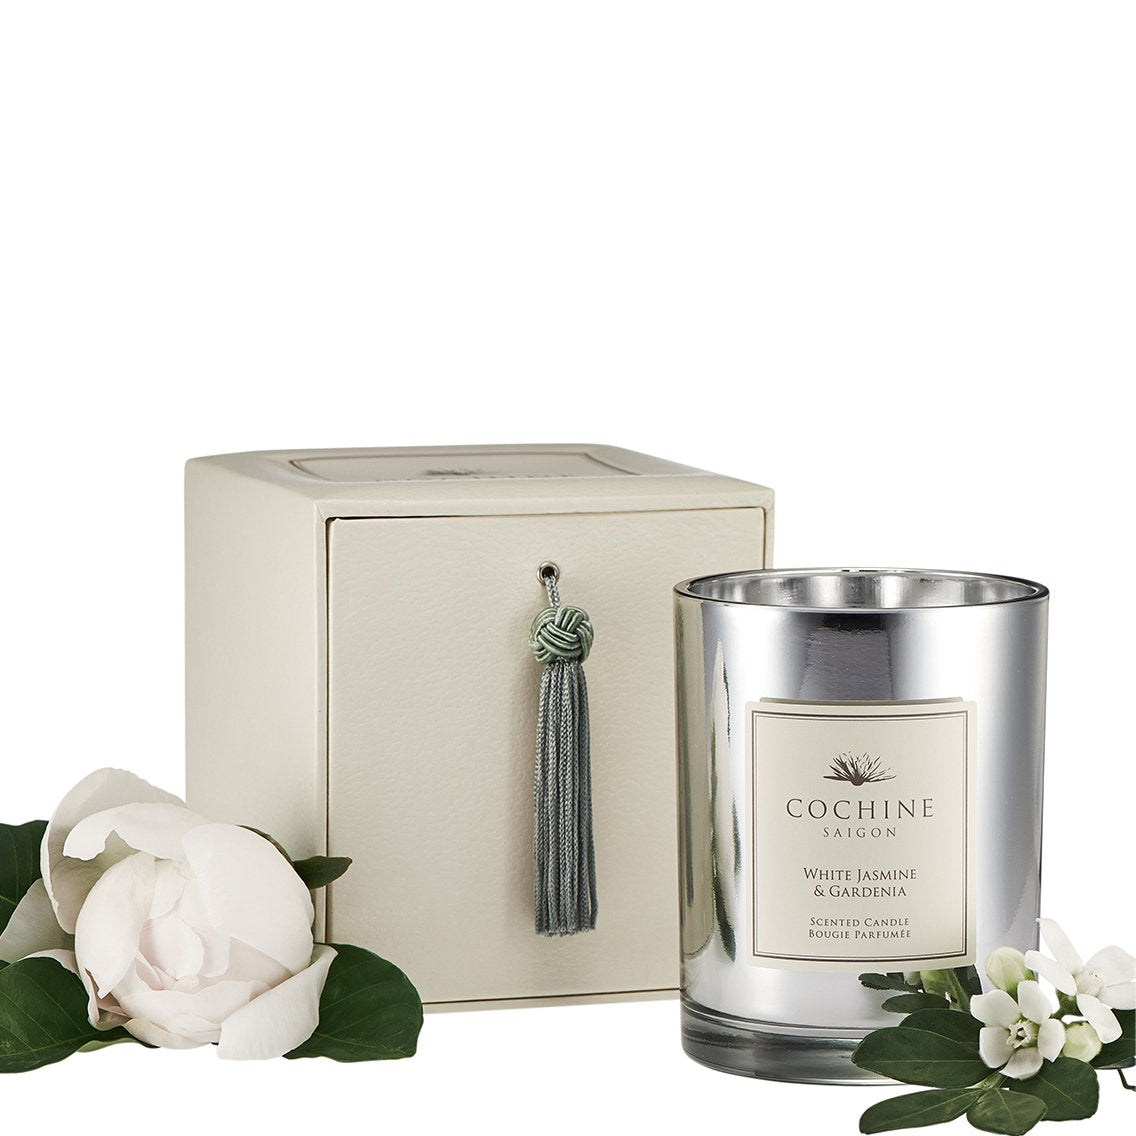 White Jasmine & Gardenia Scented Candle